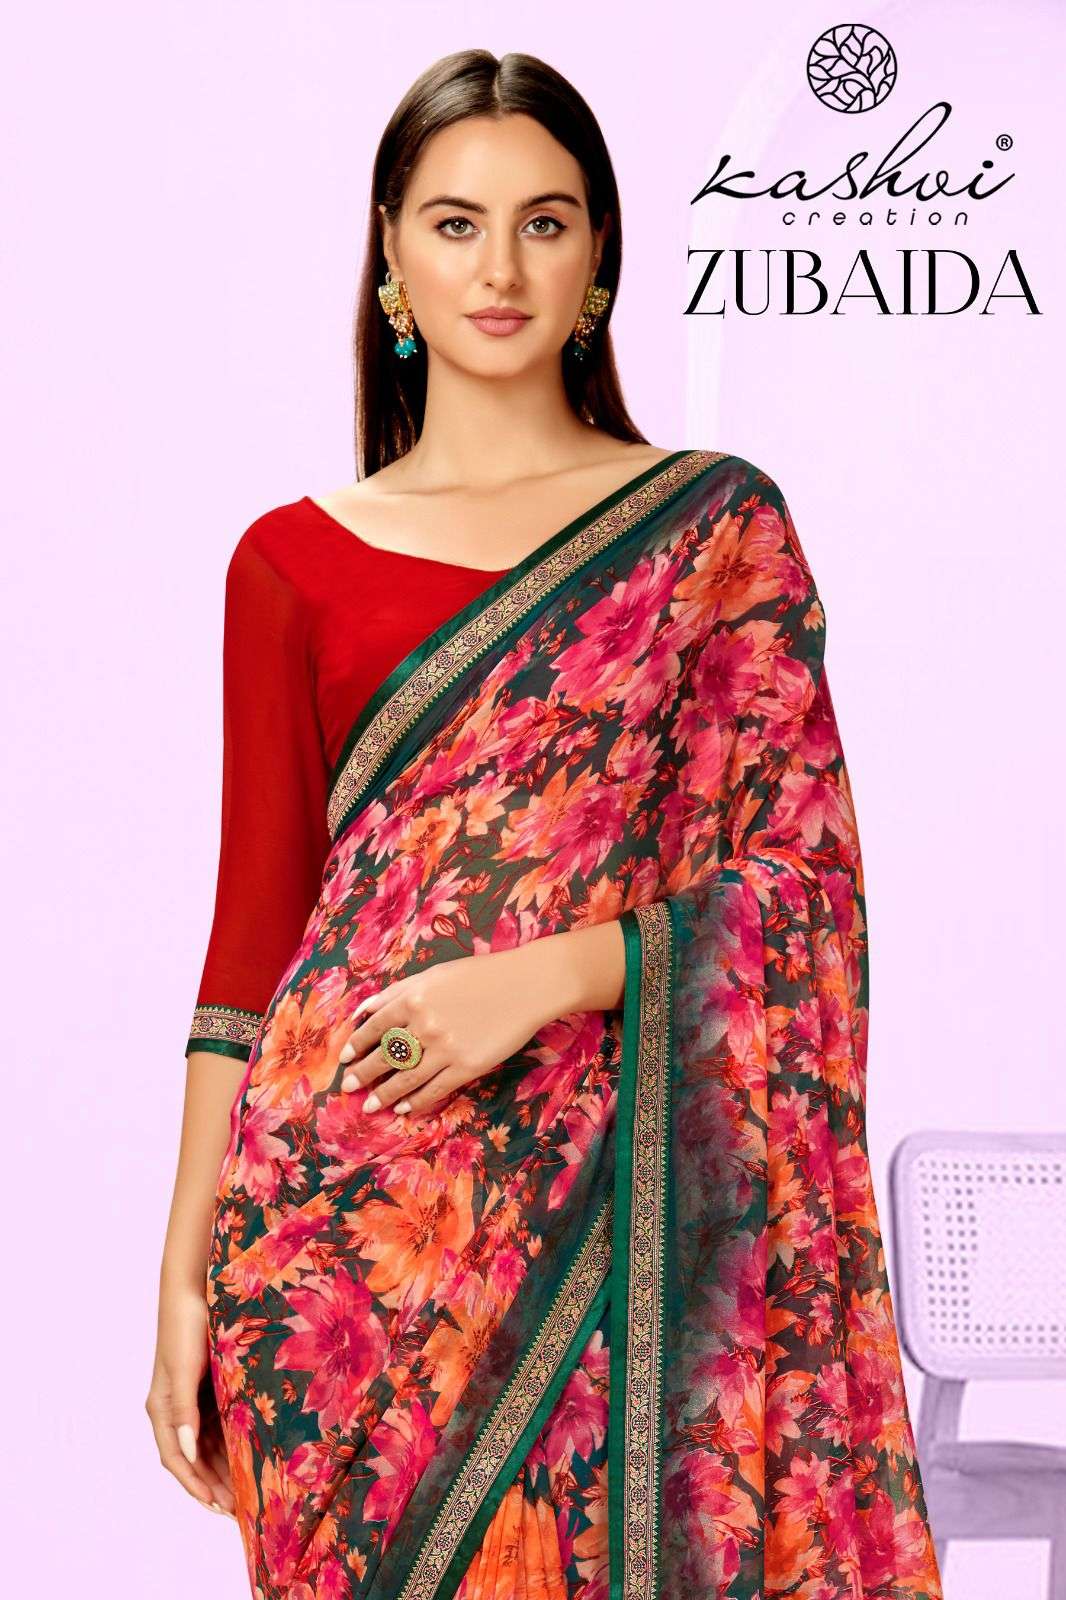 kashvi creation zubaida 97001-97008 series daily uses designer saree catalogue online dealer surat